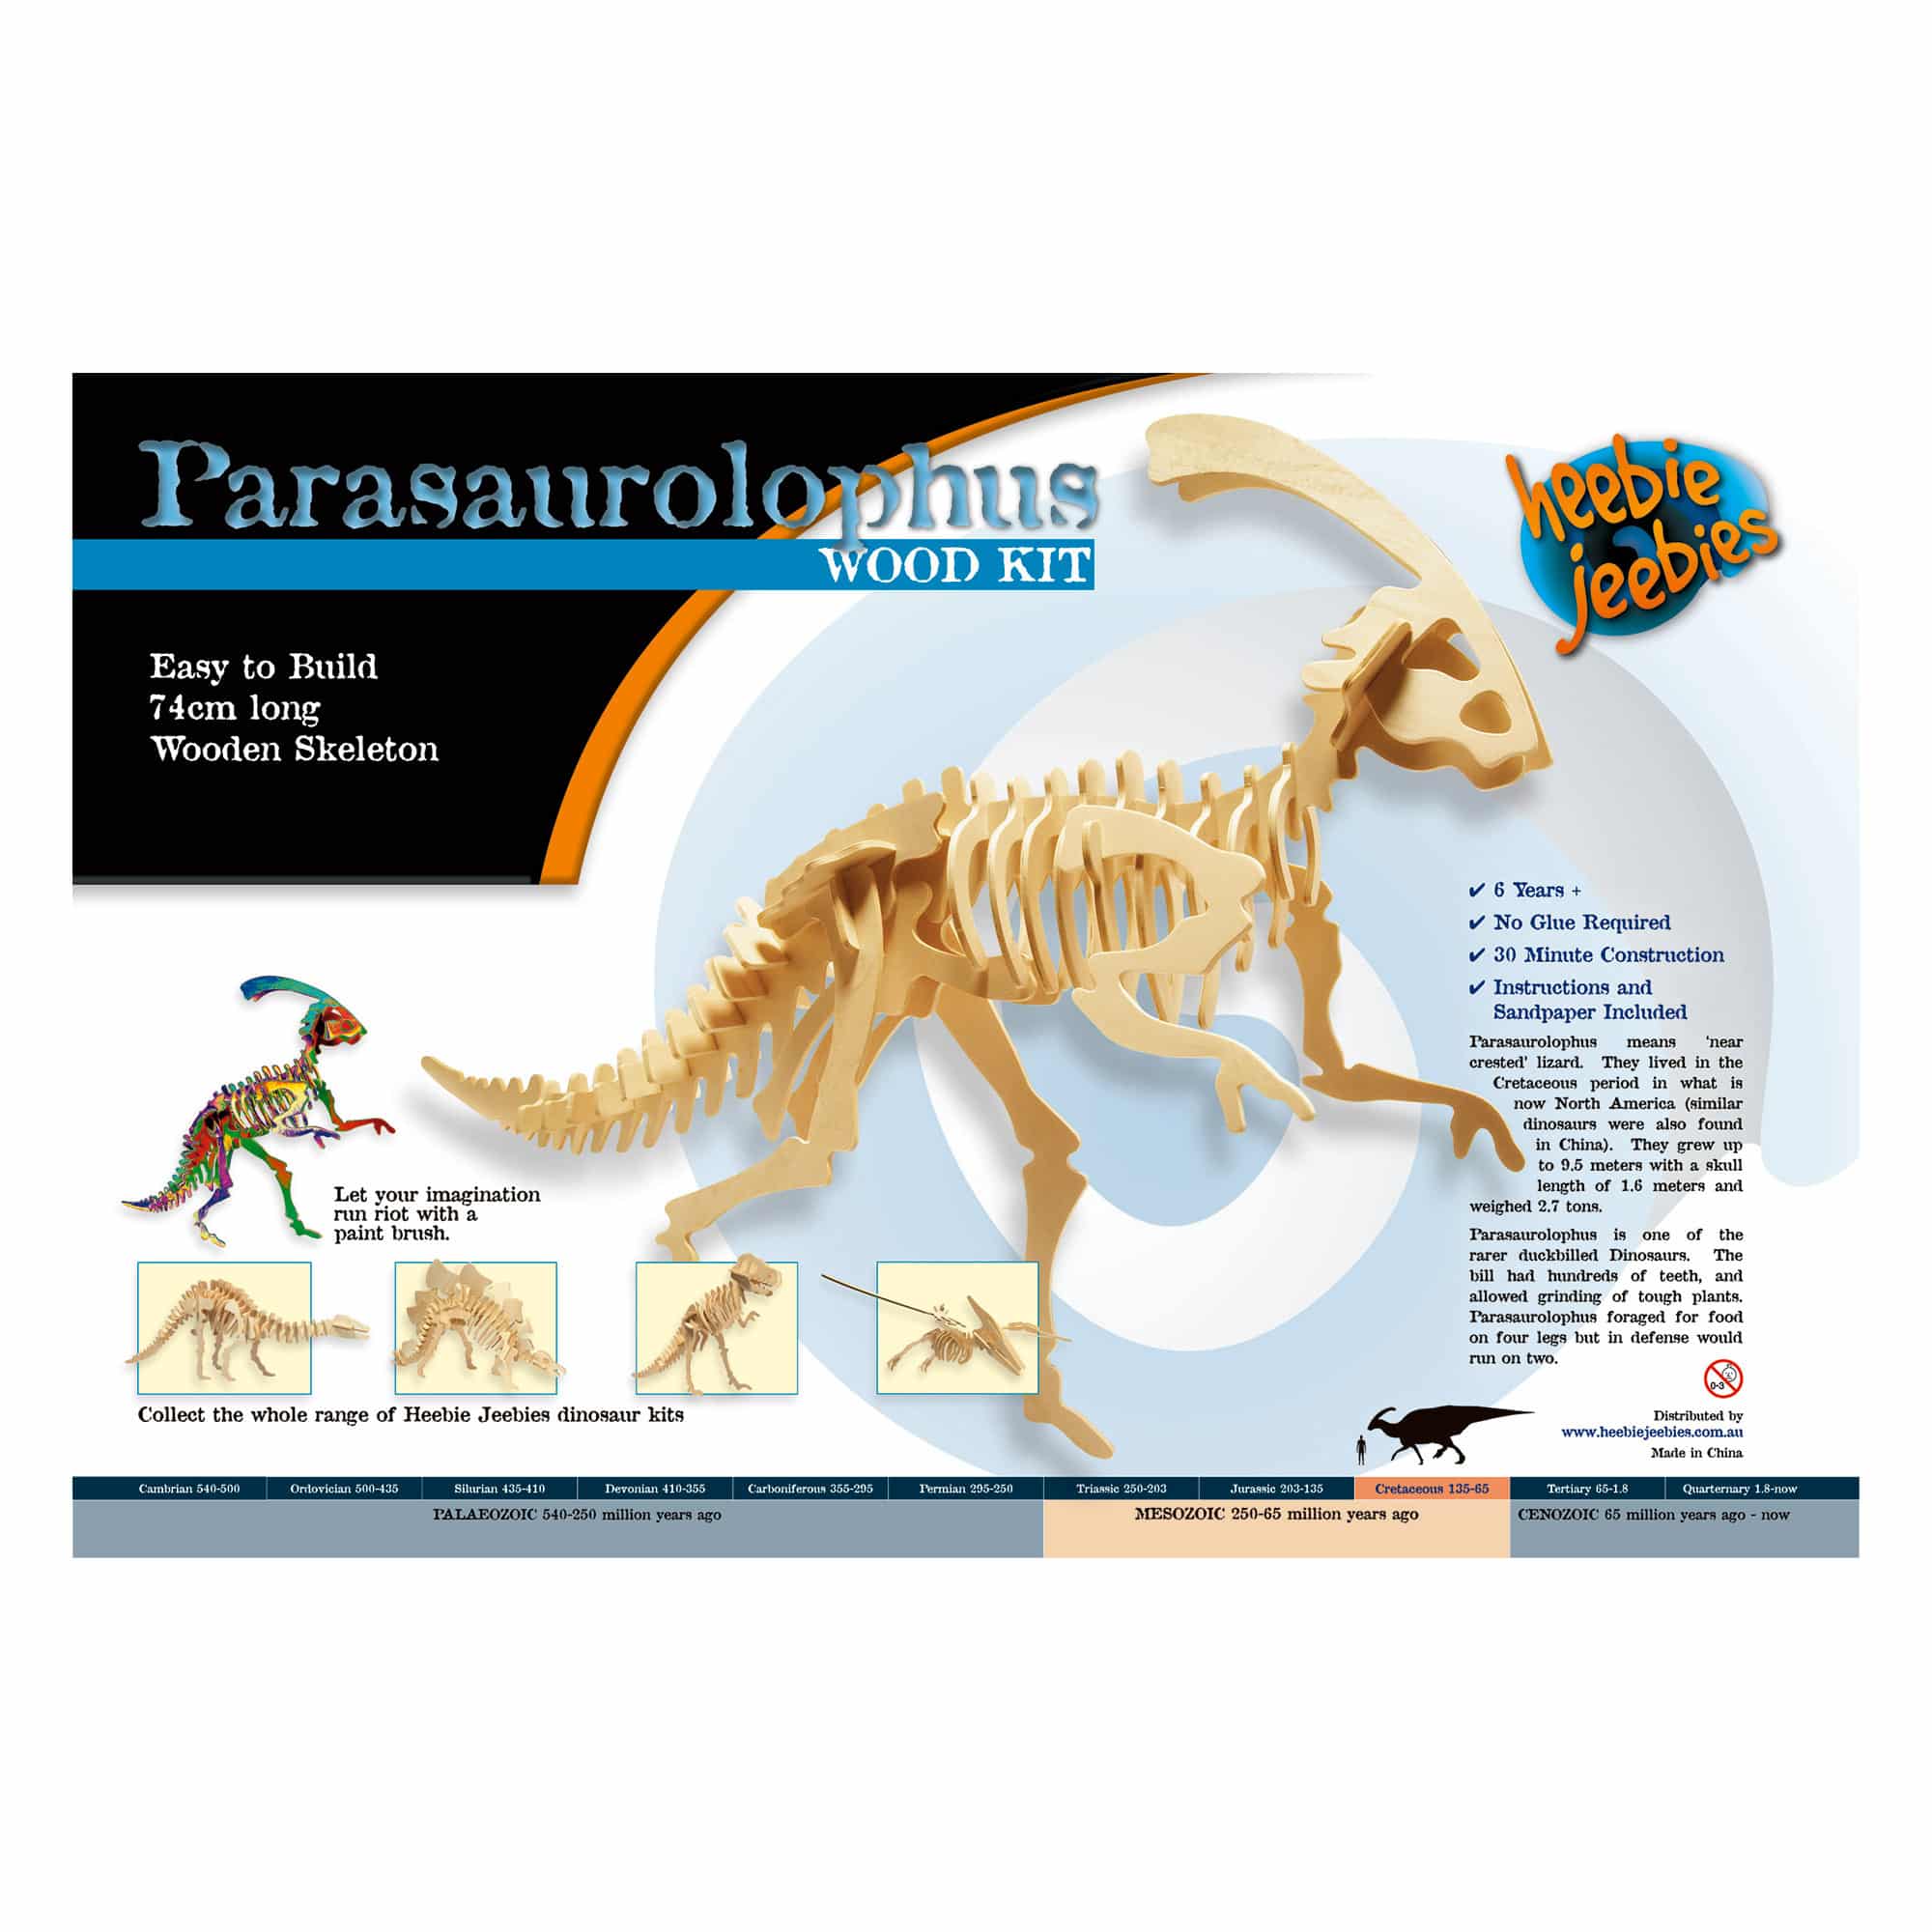 Dinosaur Skeleton Kit - 74cm Wooden Parasaurolophus